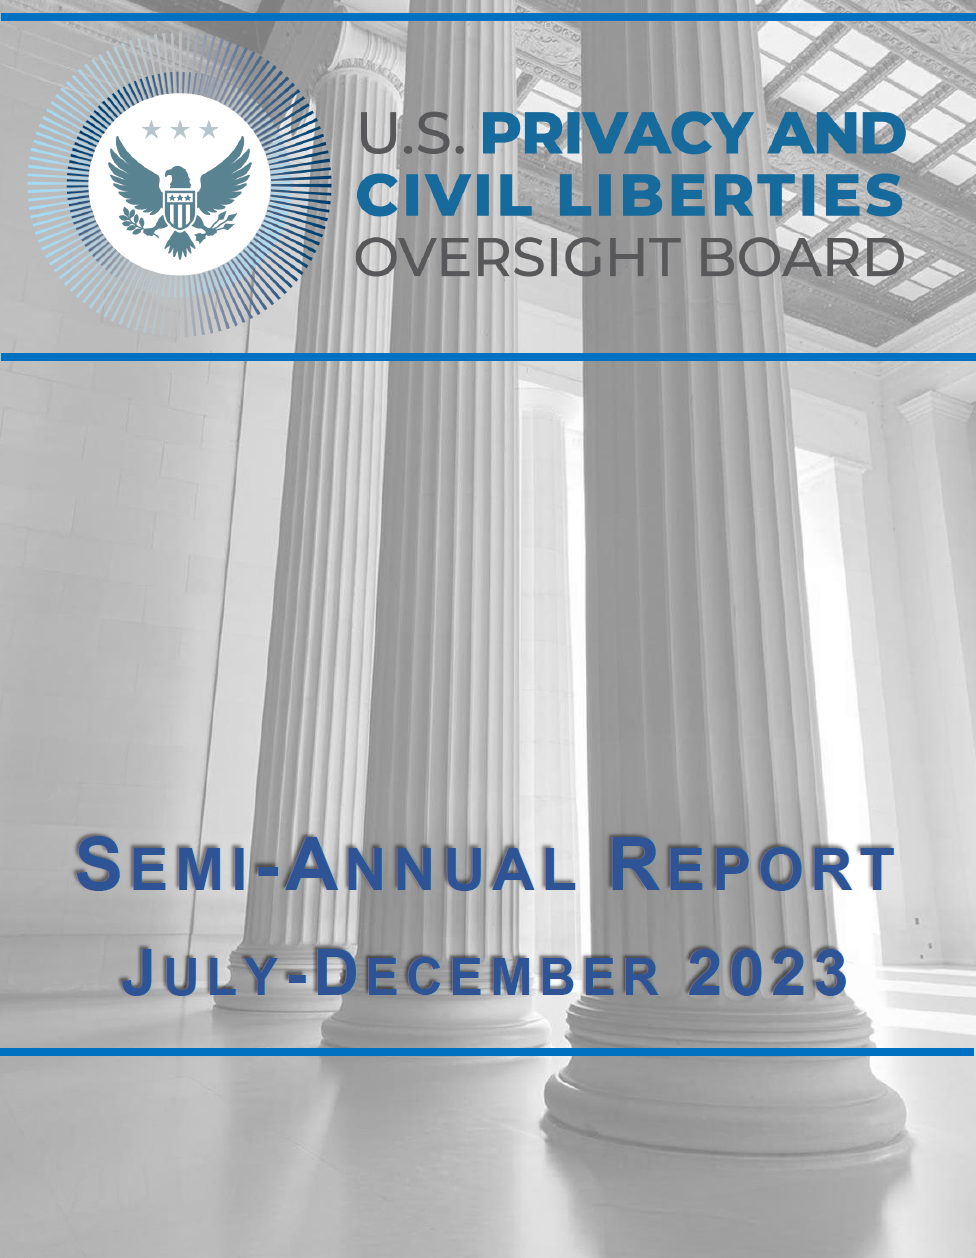 download July 2023 - December 2023Semi-Annual Report